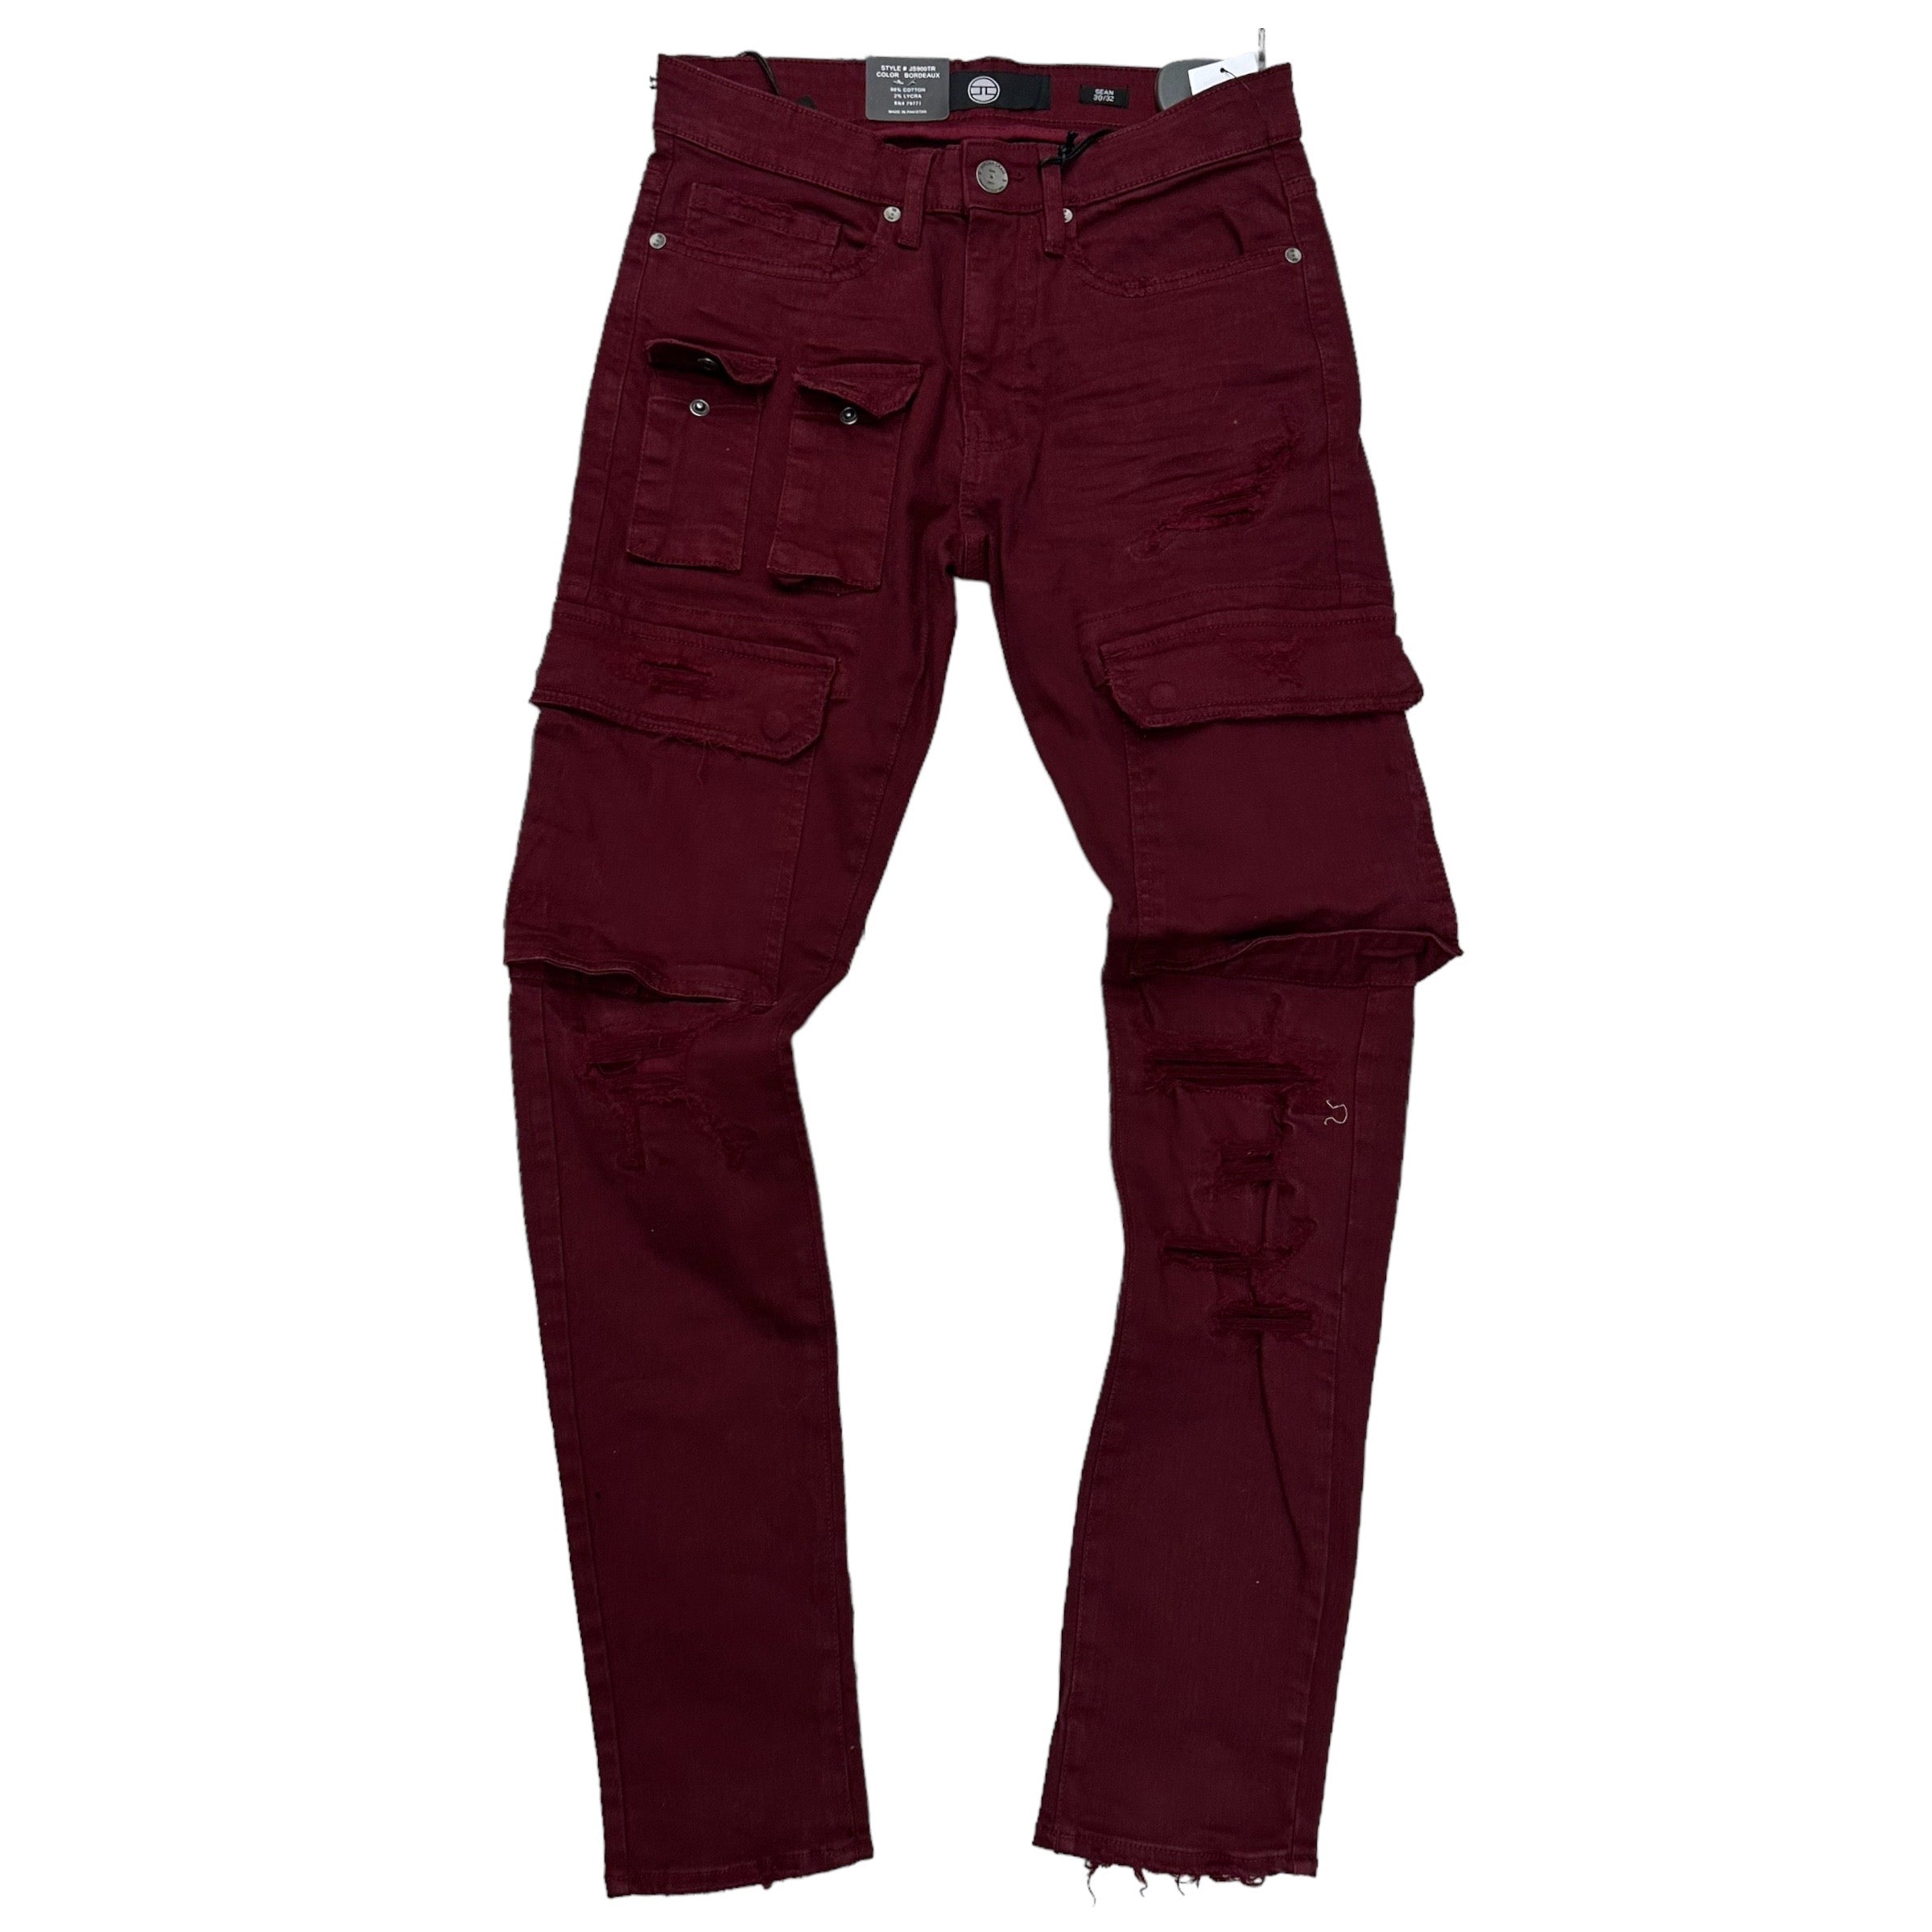 Jordan Craig slim fit jeans Burgundy js900tr jr950tr or